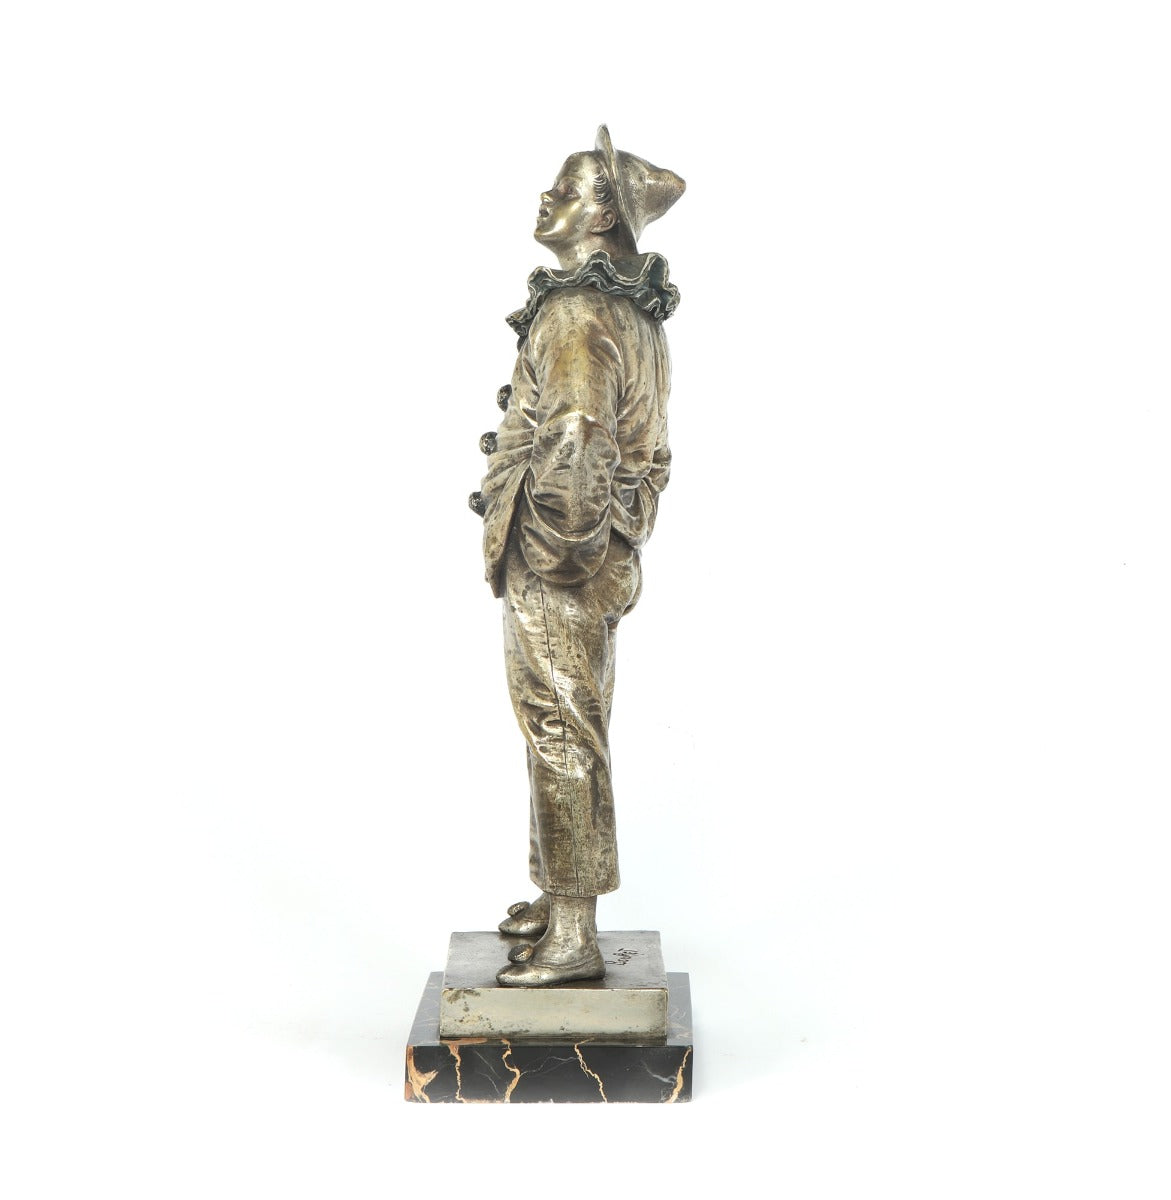  French Silver Gilt Bronze Sculpture by Bouret left